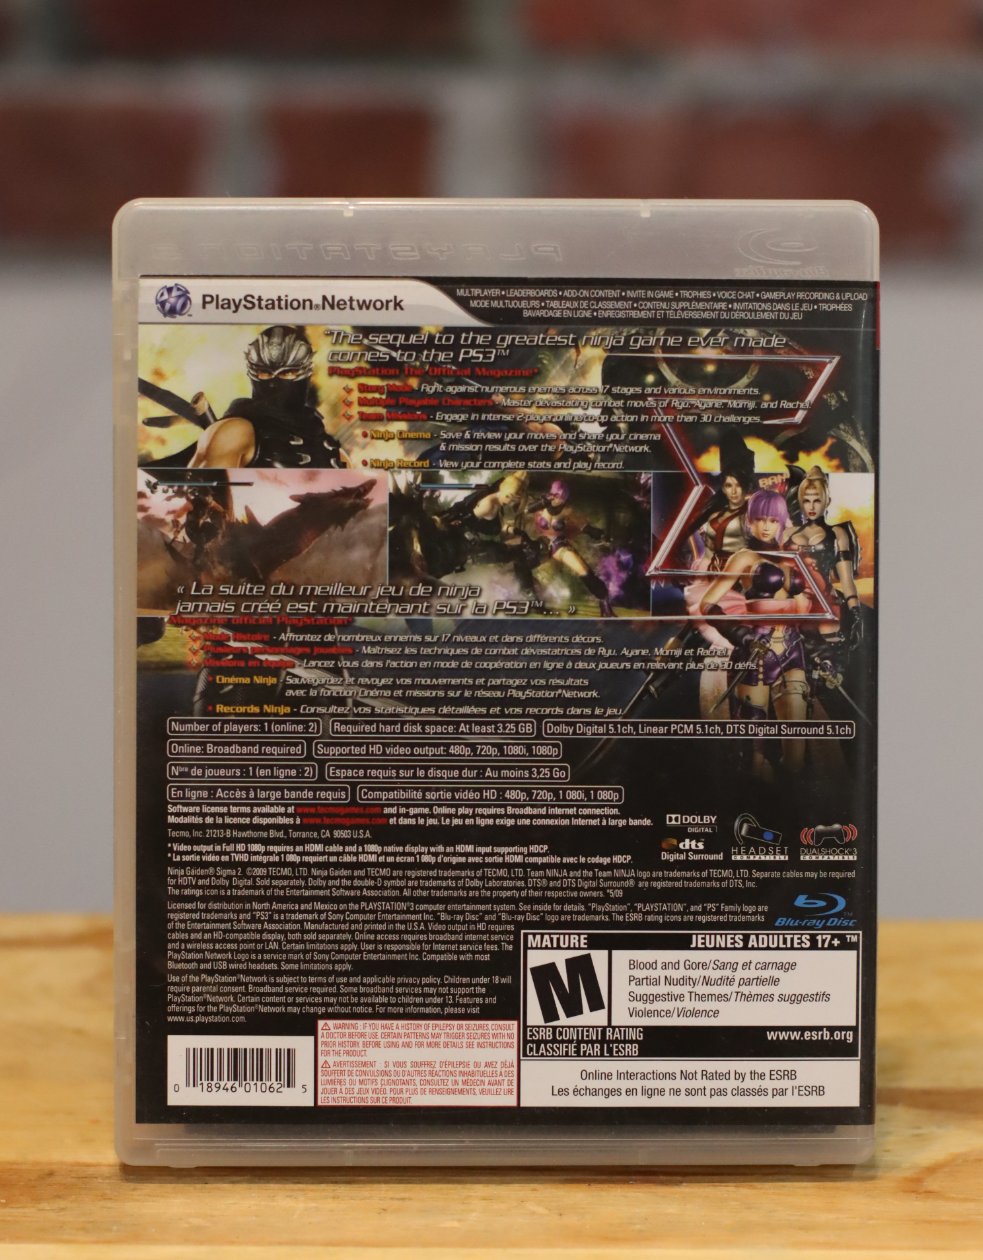 Ninja Gaiden 2 Original Playstation PS3 Video Game Complete